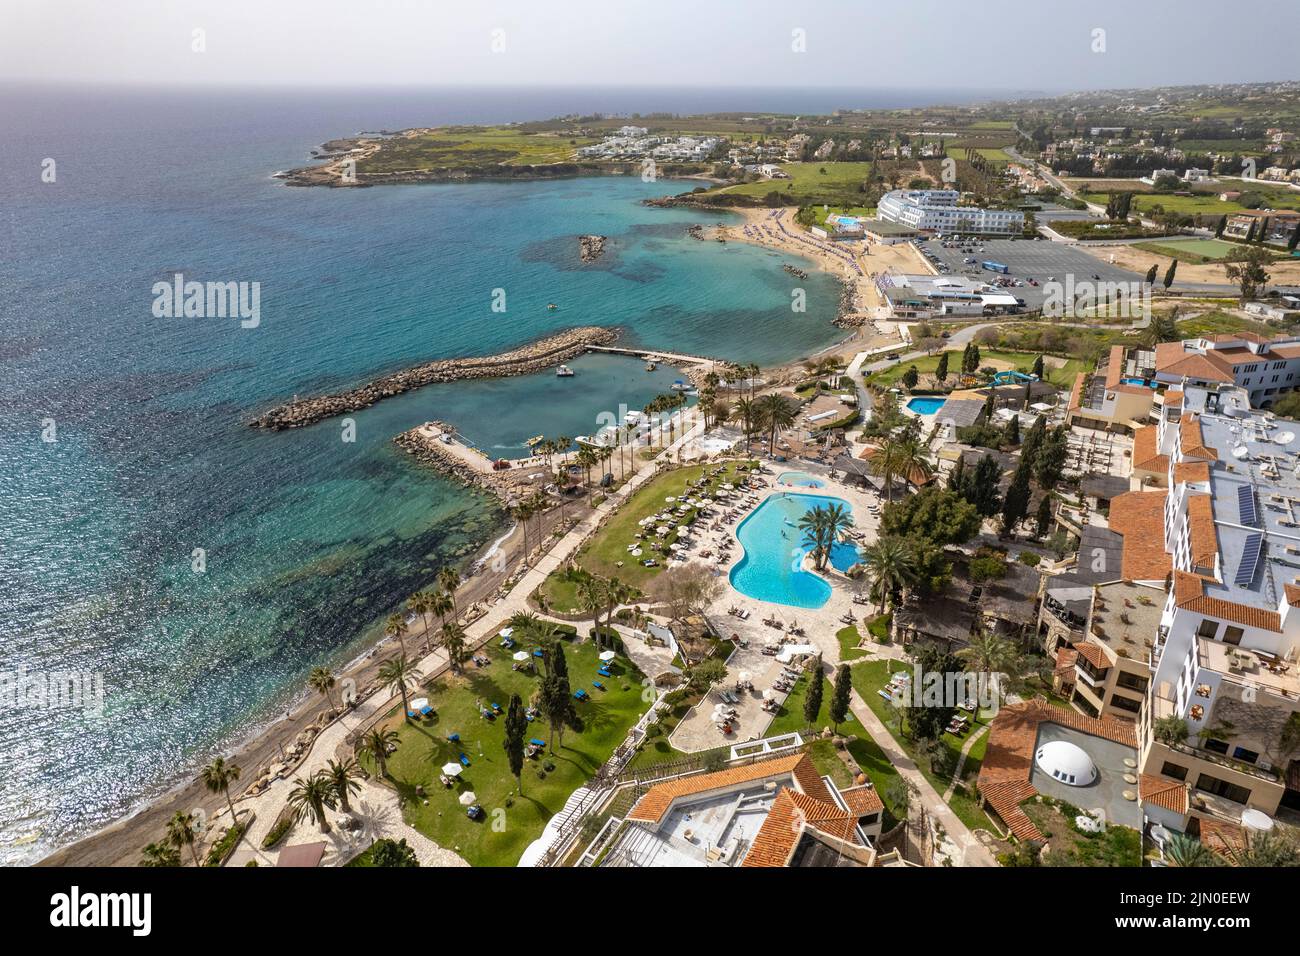 Strand und Hotels der Coral Bay aus der Luft gesehen, Zypern, Europa | vue aérienne de la plage et des hôtels de Coral Bay, Chypre, Europe Banque D'Images